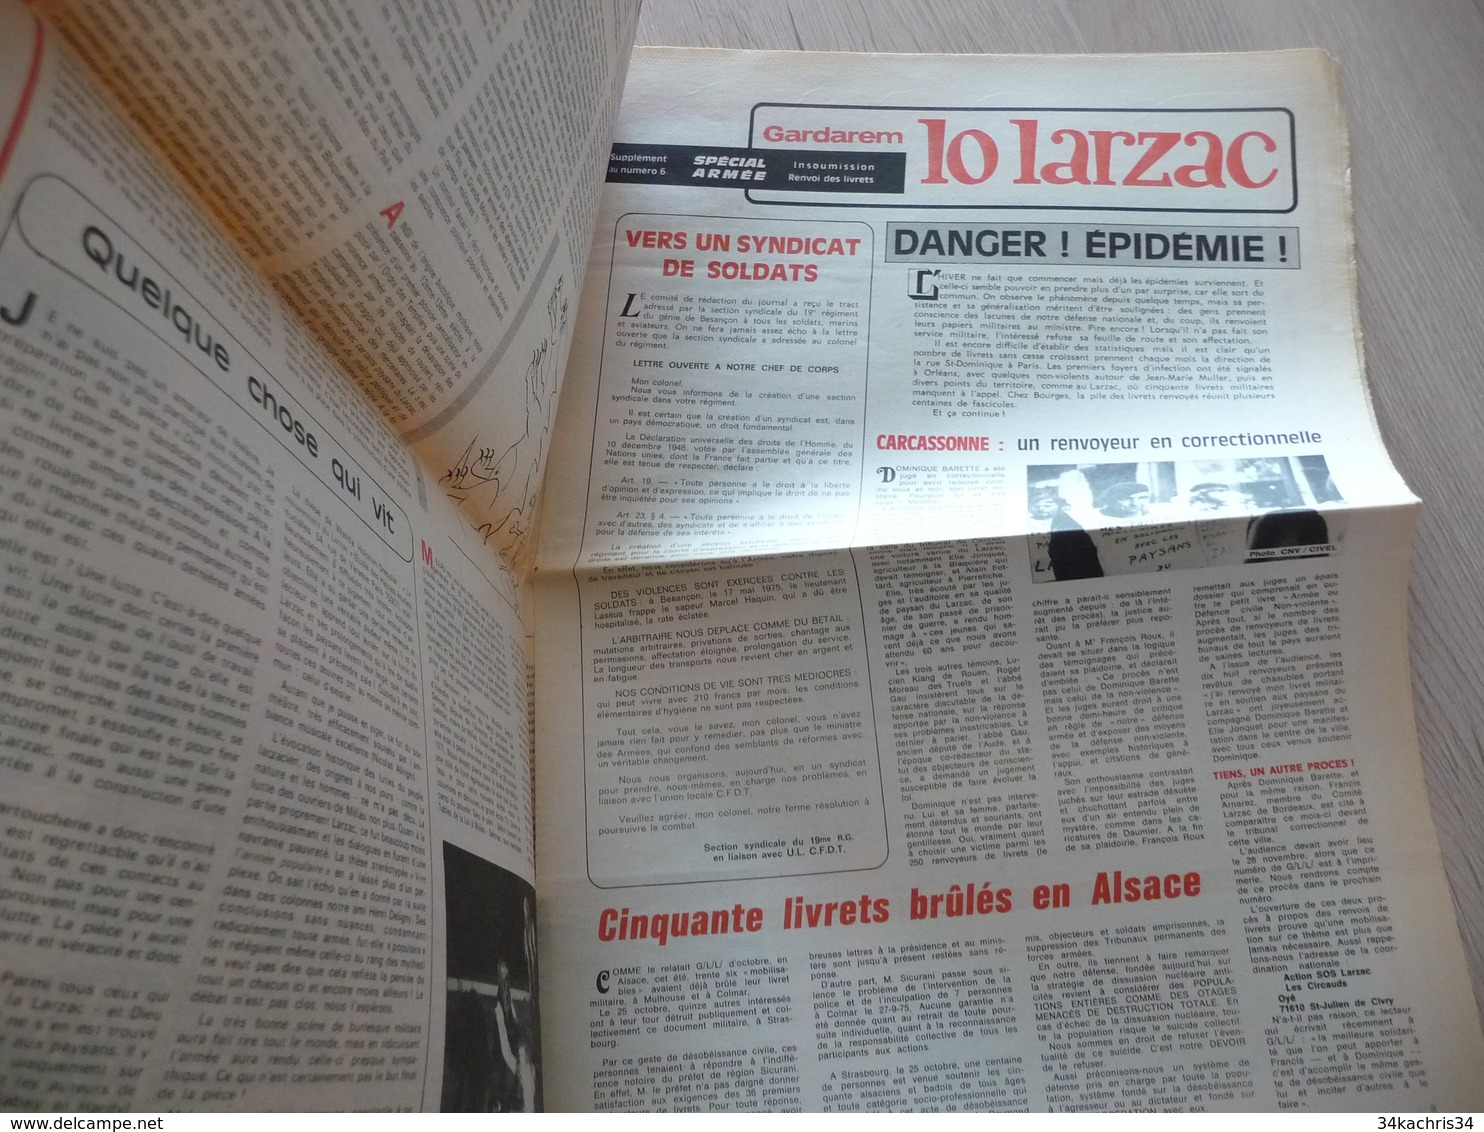 Journal Larzac Défense Du Larzac Gardarem  Lo Larzac N°6 Novembre Décembre 1975 - Languedoc-Roussillon